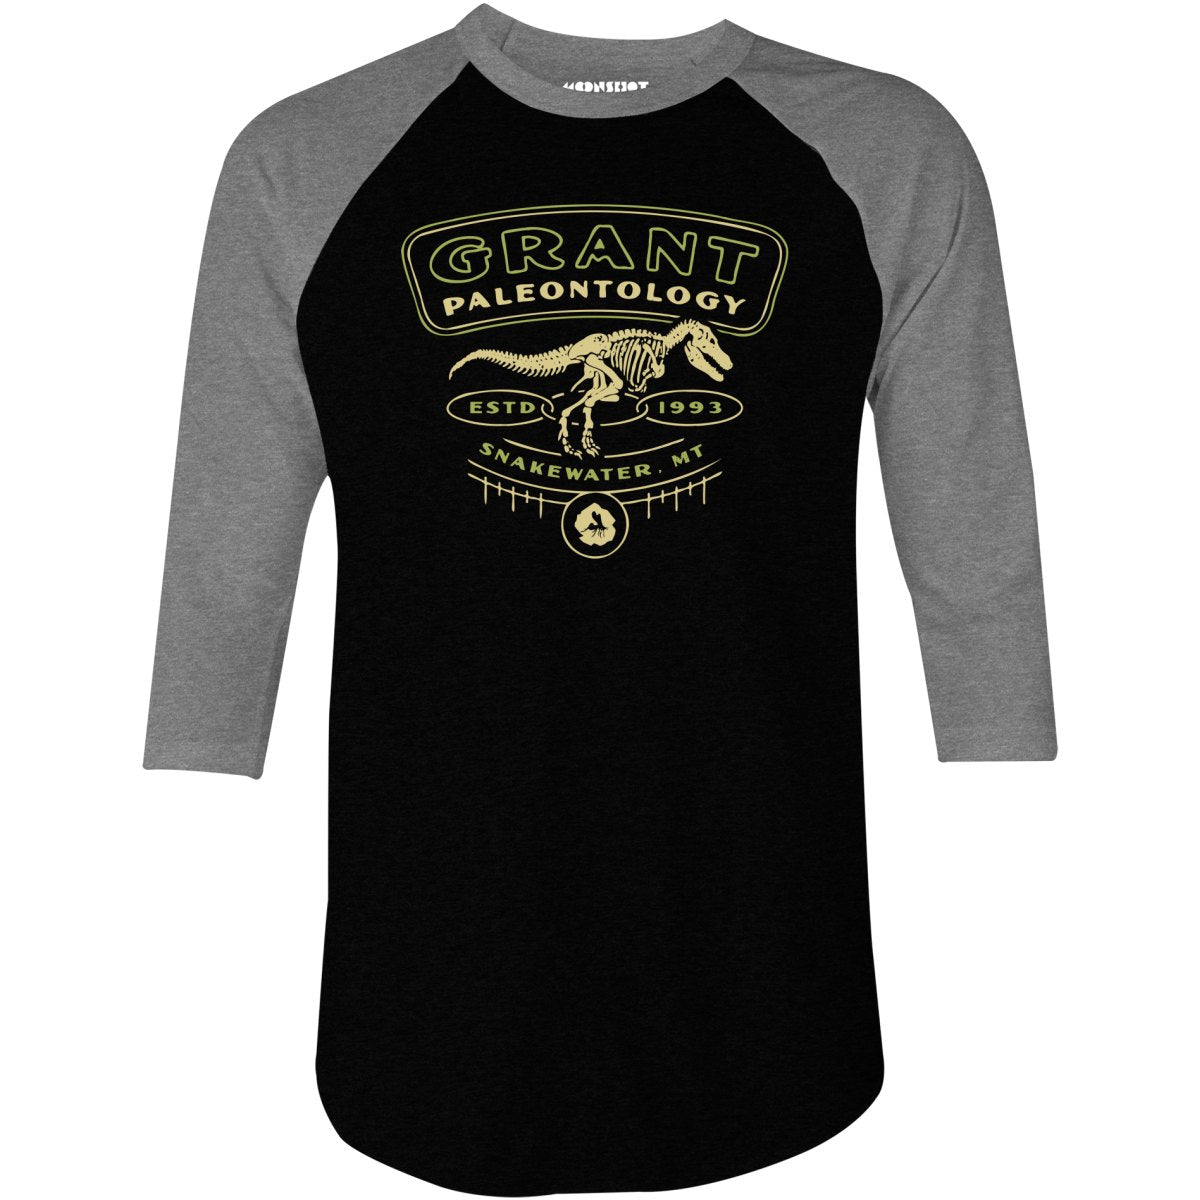 Grant Paleontology - 3/4 Sleeve Raglan T-Shirt